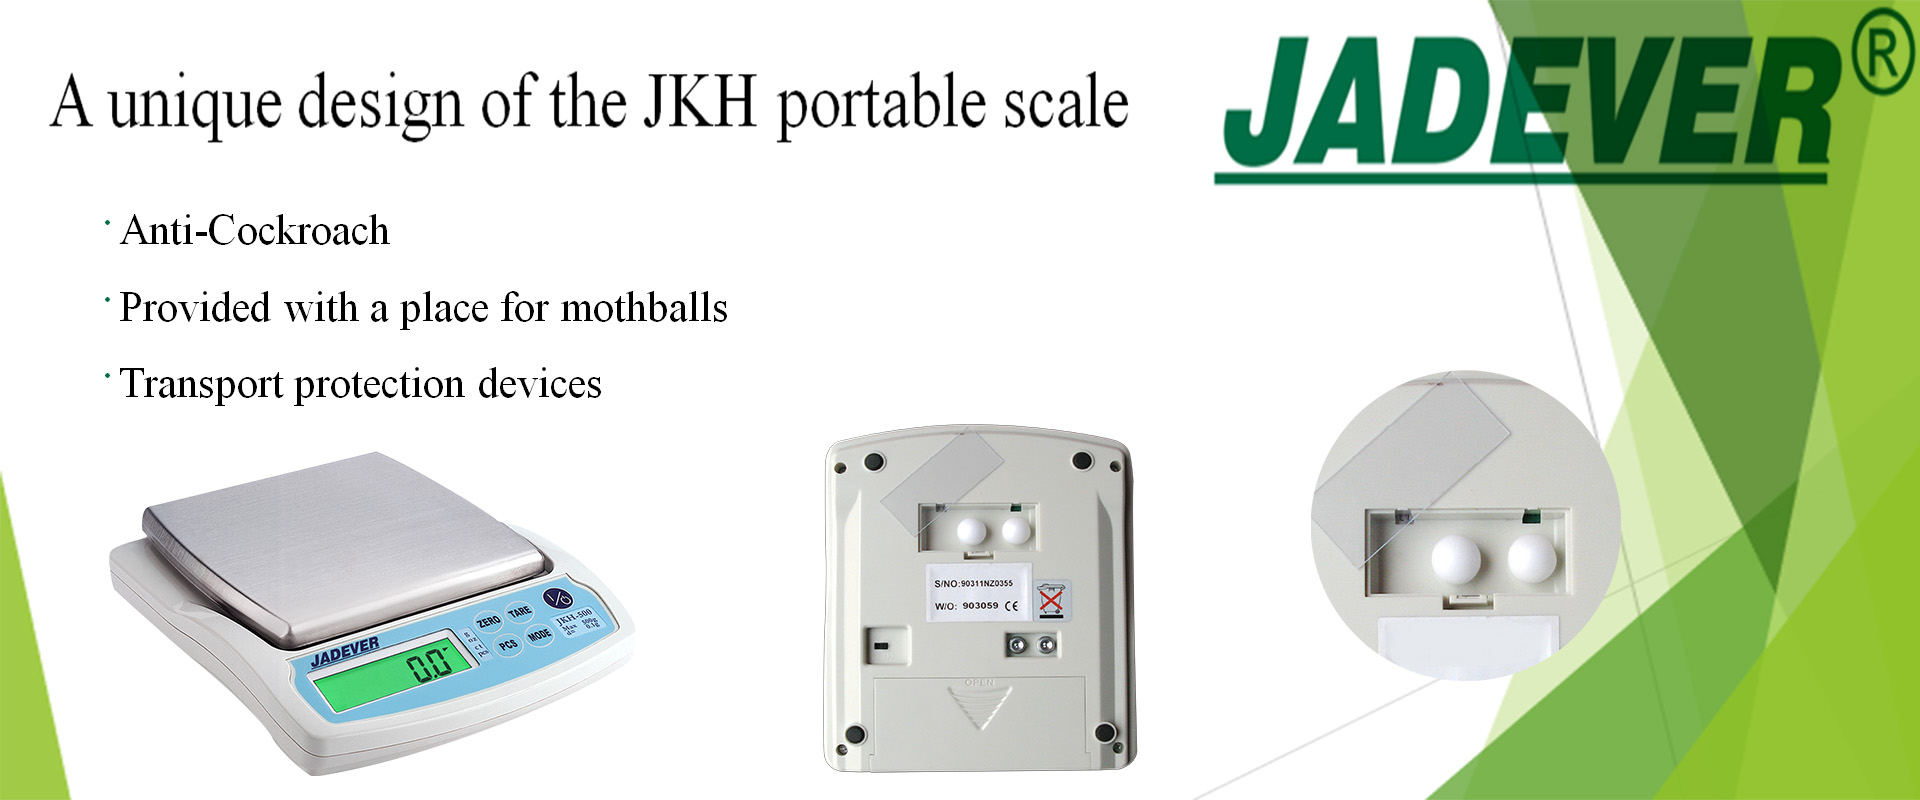 A unique design of the JKH portable scale